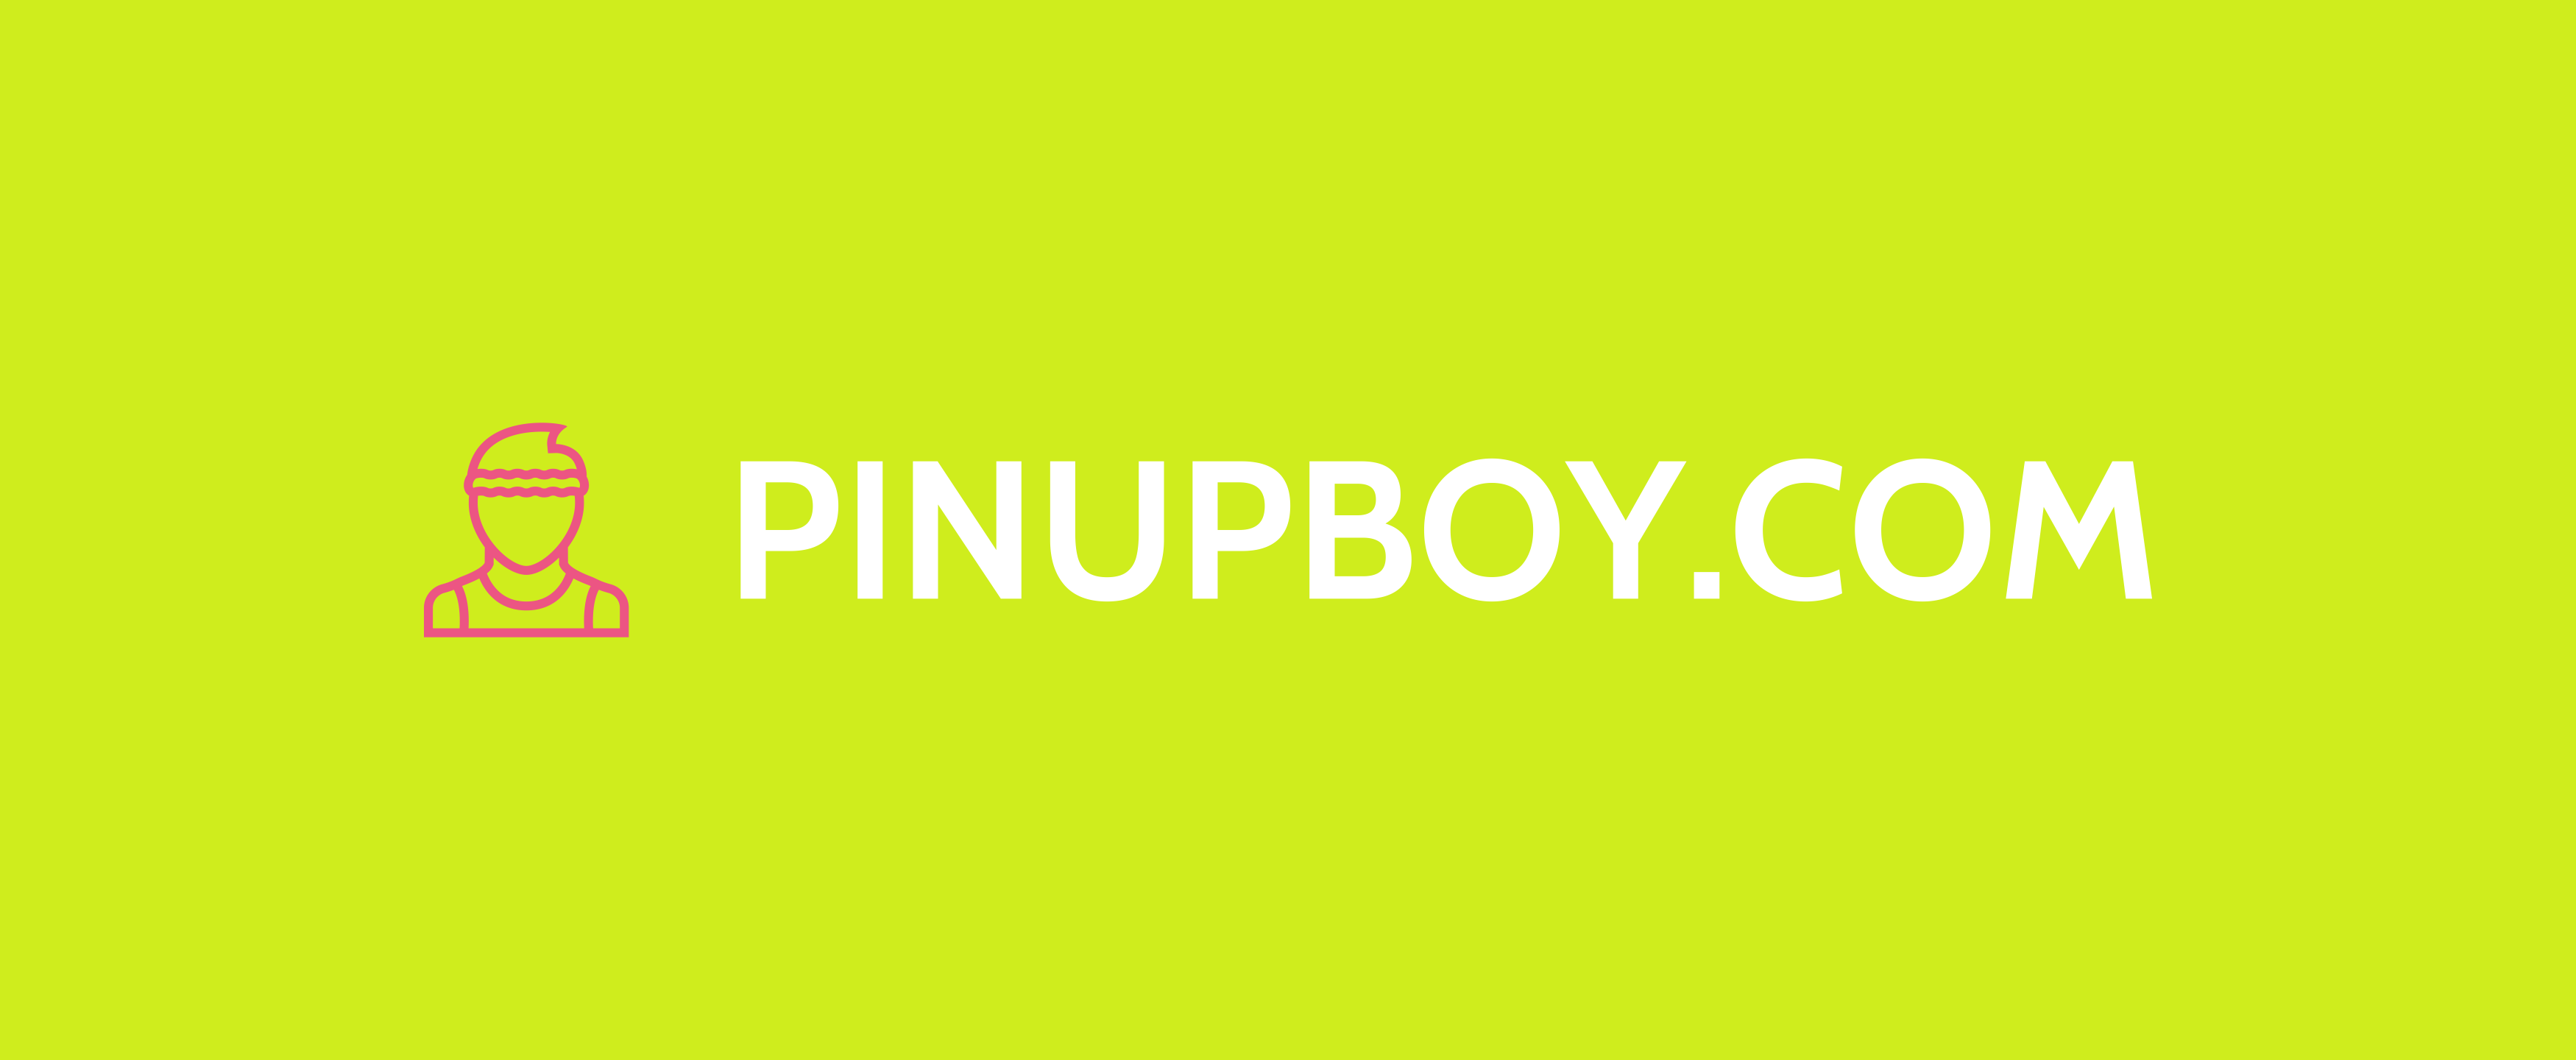 Pin-Up Boy